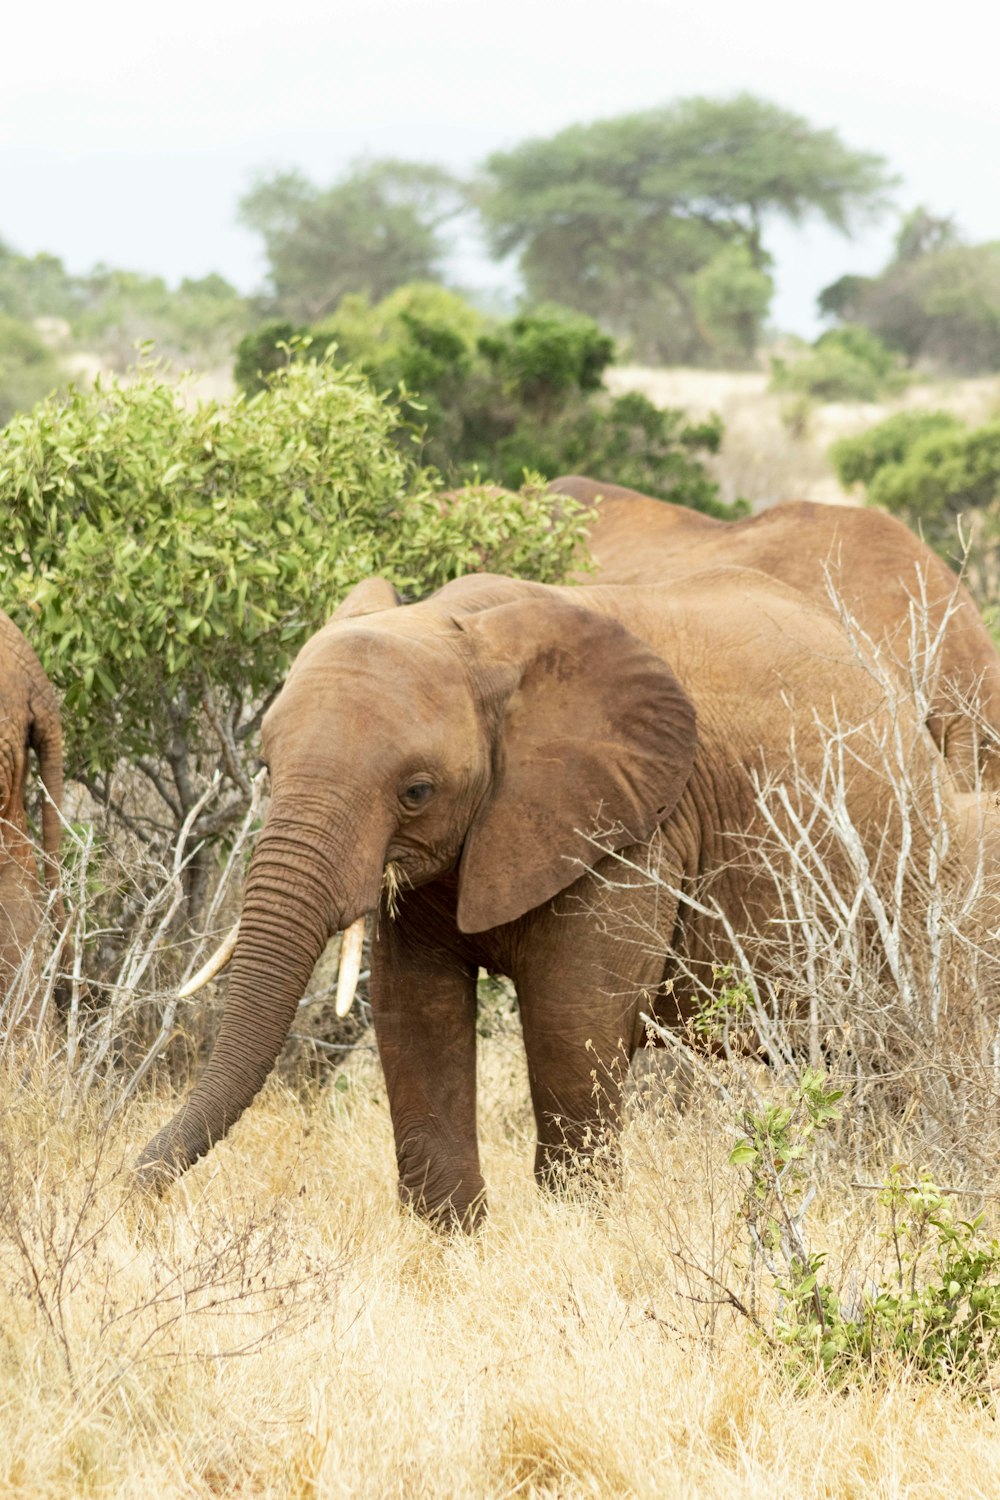 a couple of elephants walking through a dry grass field